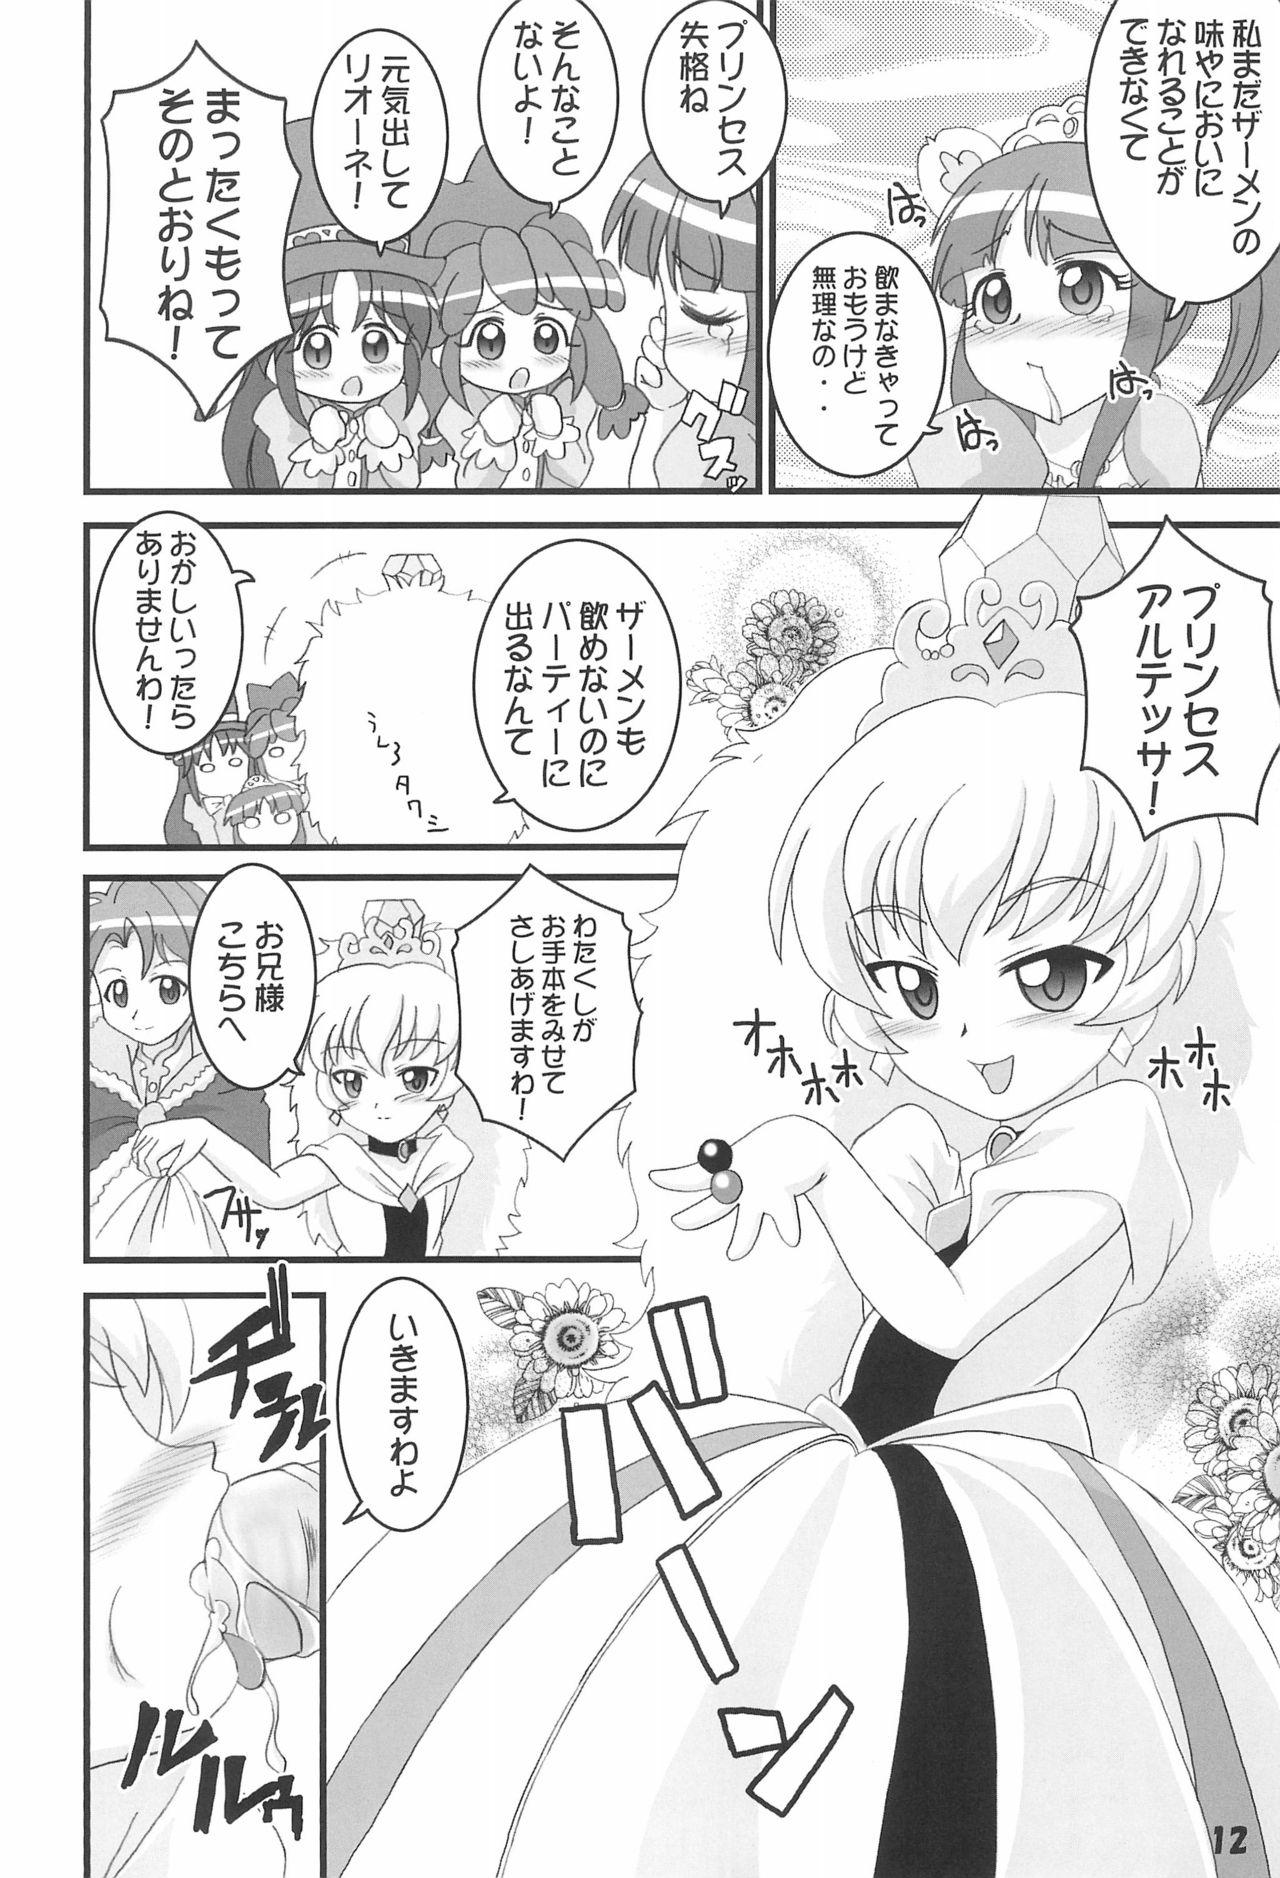 Grosso FutaCome - Fushigiboshi no futagohime Cosmic baton girl comet san Hooker - Page 12